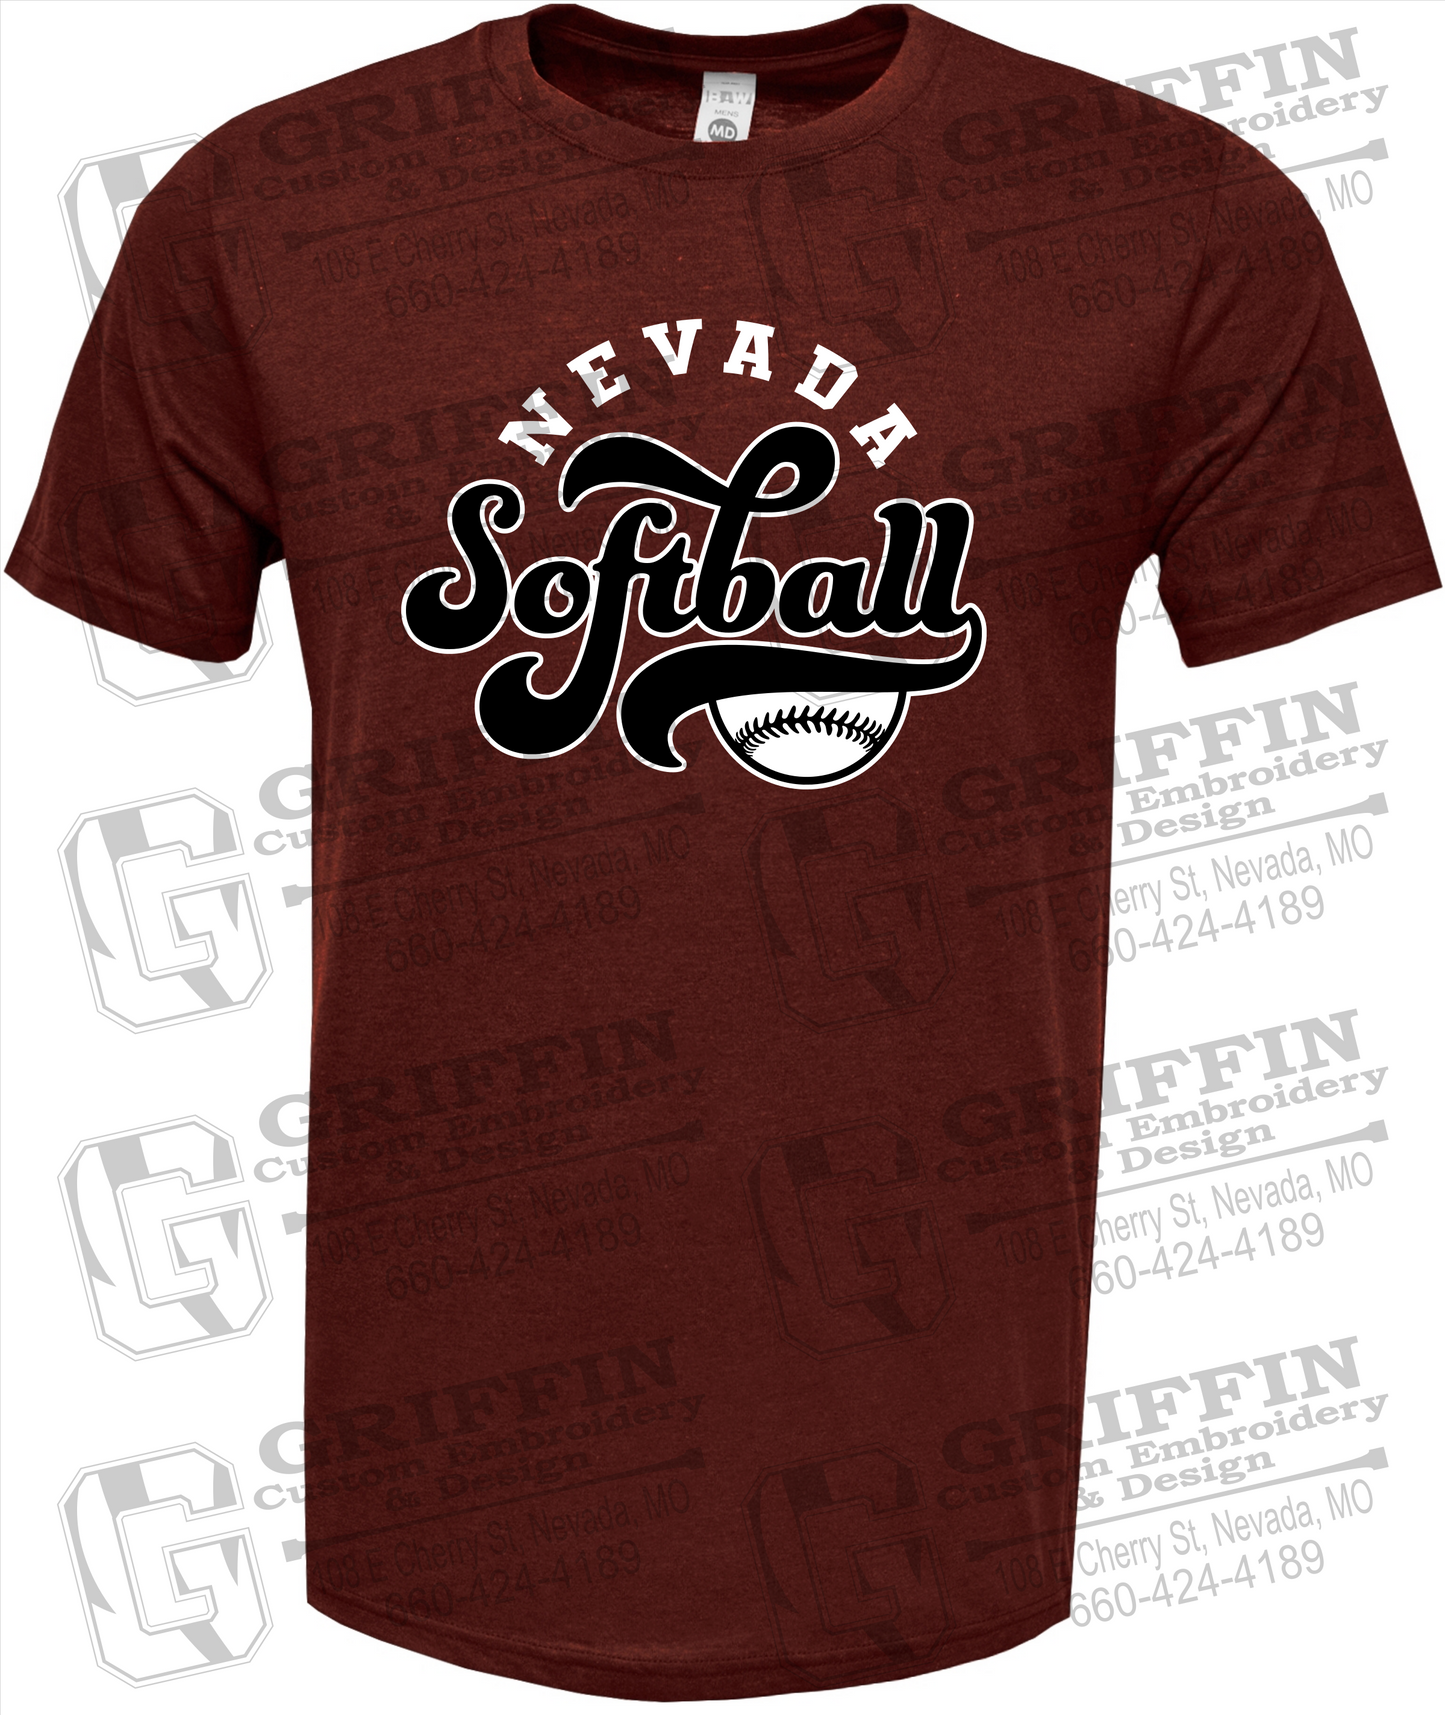 Soft-Tek Short Sleeve T-Shirt - Softball - Nevada Tigers 24-D